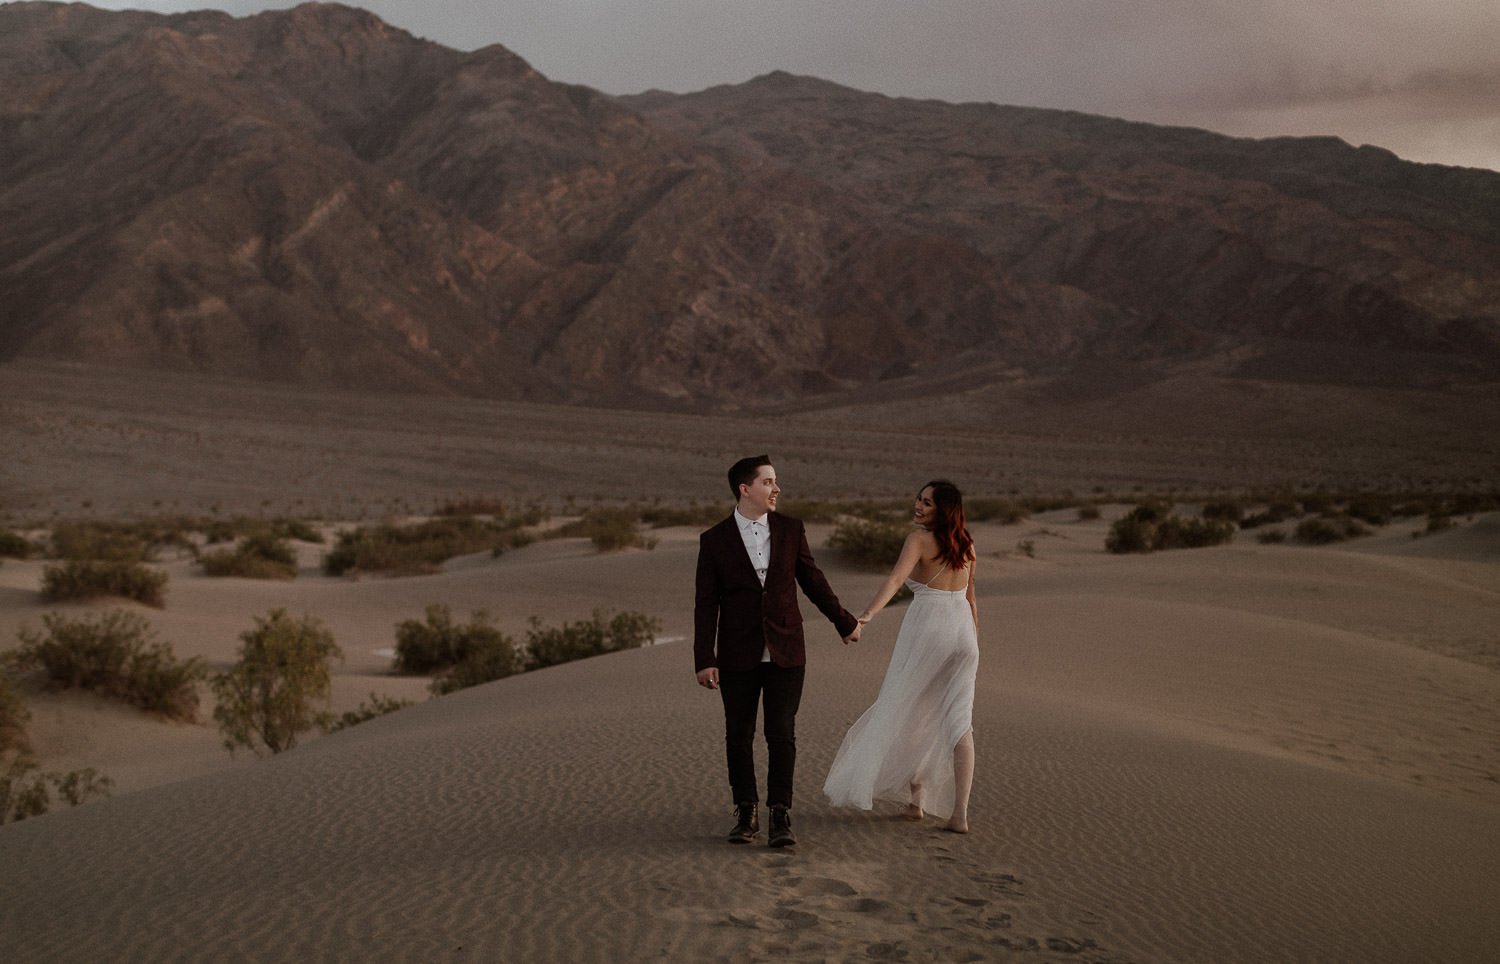 Adventure elopement in Death Valley Sand Dunes